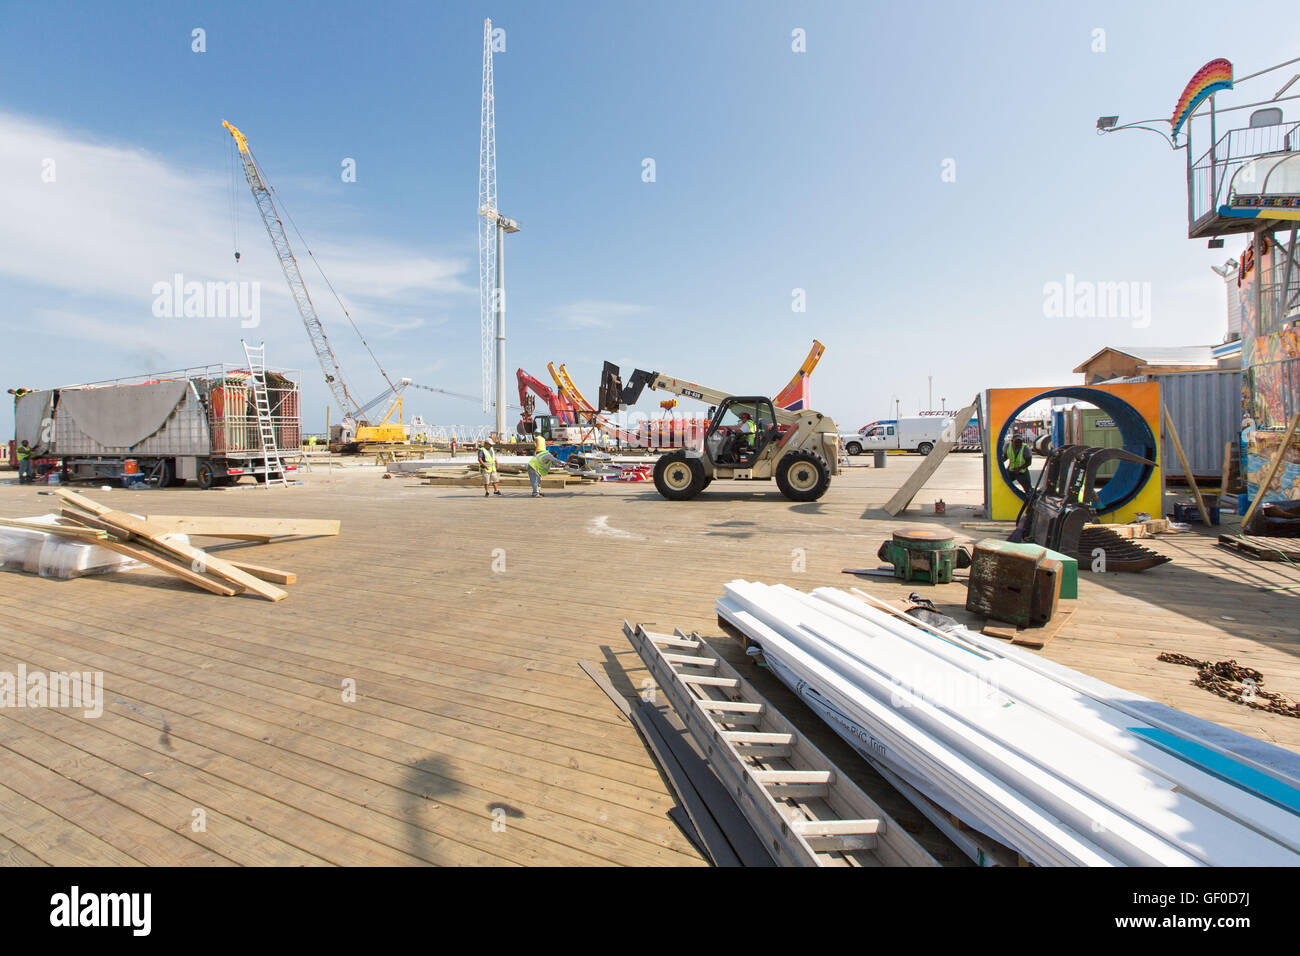 Wiederaufbau Seaside Park nj Boardwalk nach Hurrikan Sandy Stockfoto